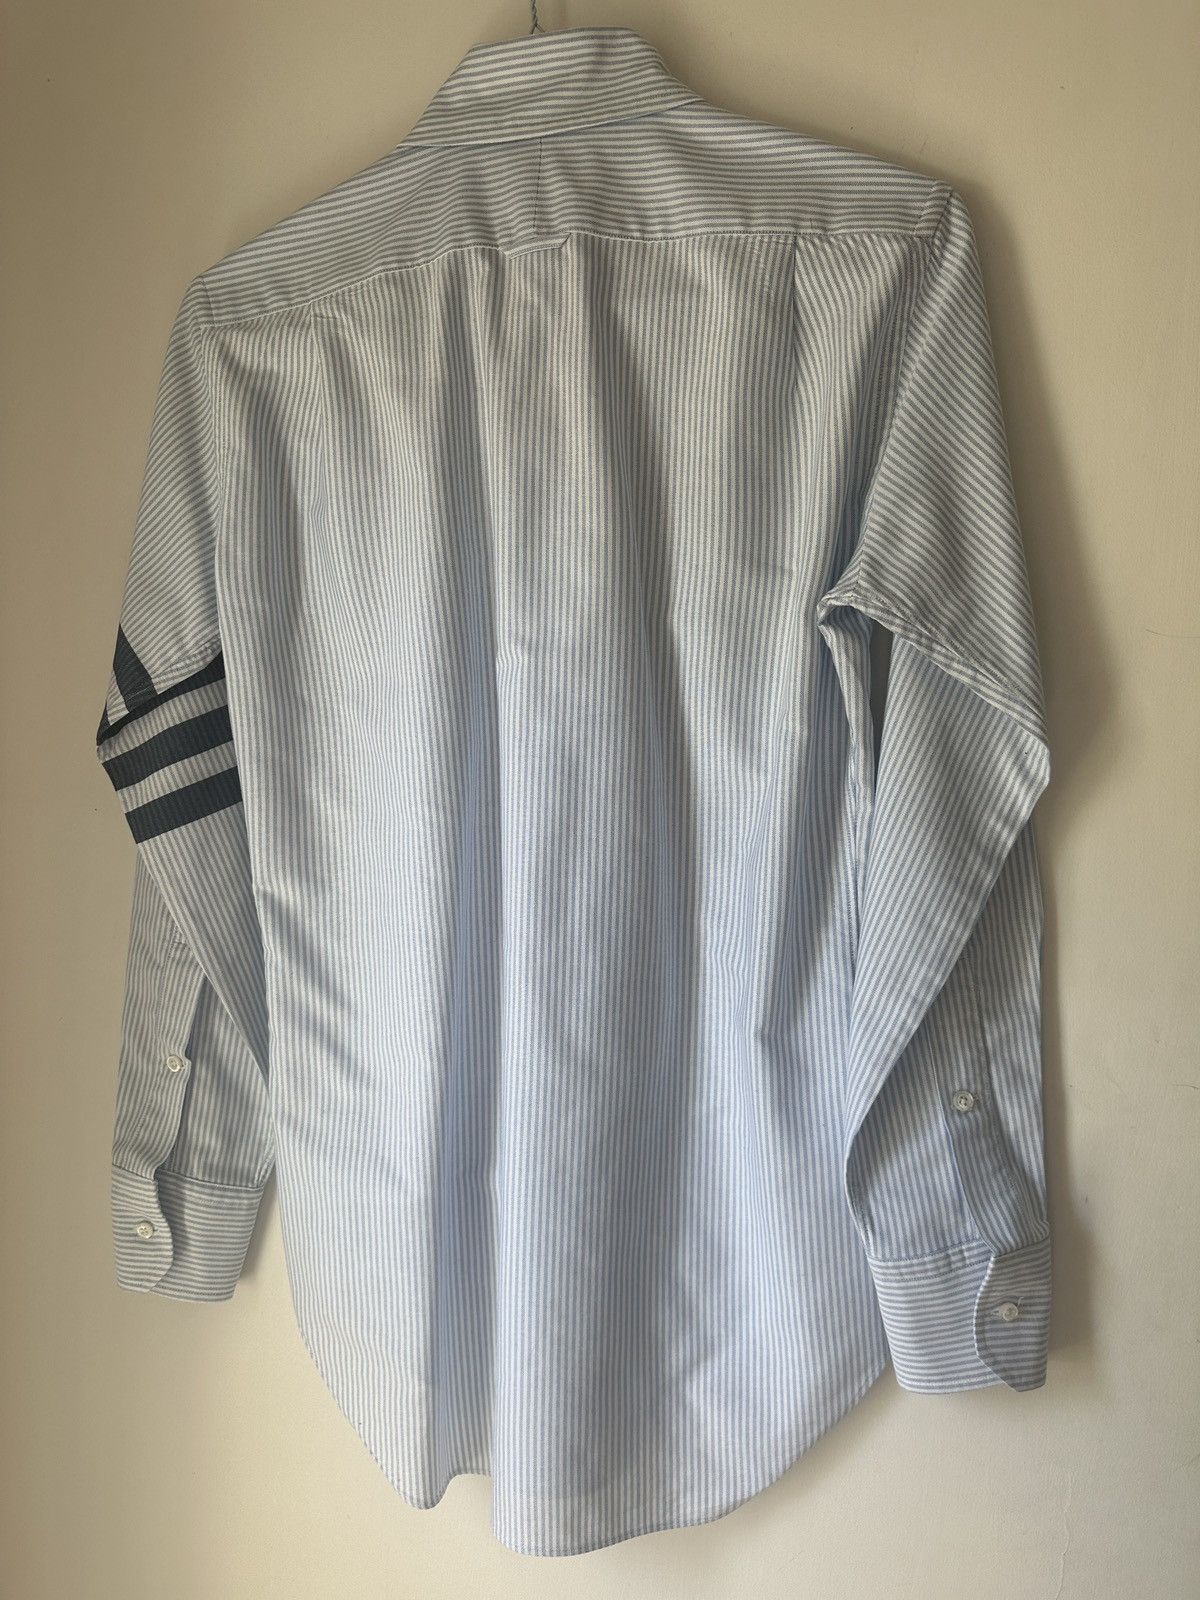 SS2017 Thom Browne Classic Blue 4 Bar Stripe Oxford Shirt - 5